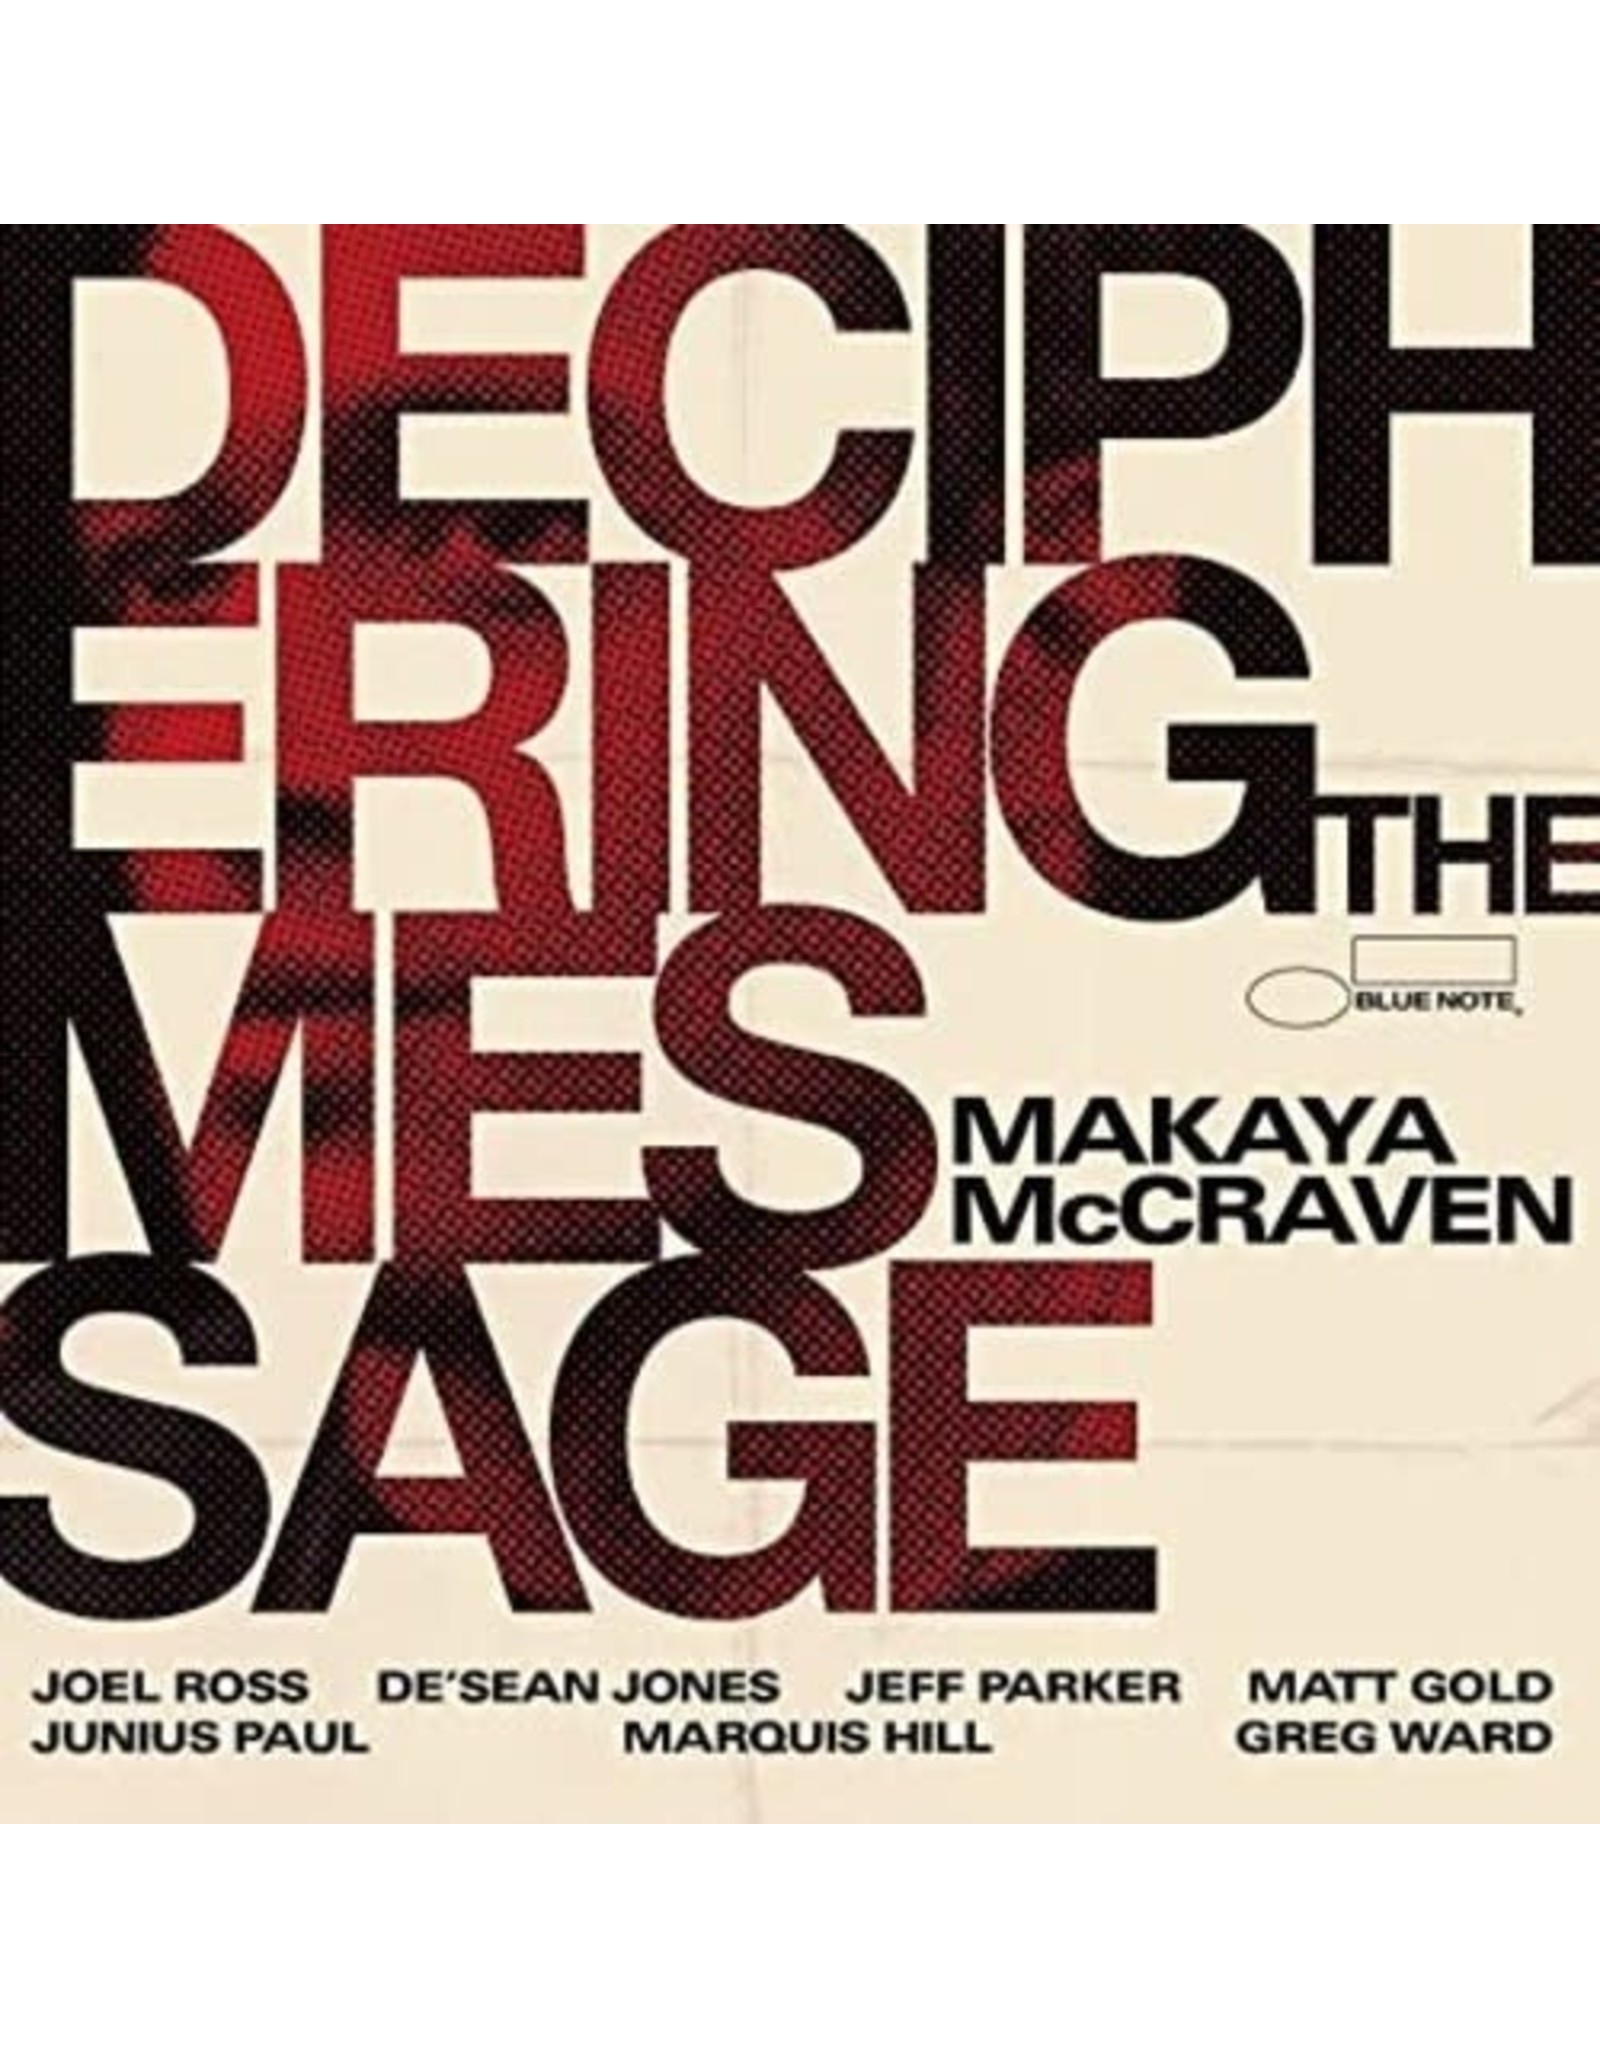 New Vinyl Makaya McCraven - Deciphering The Message LP